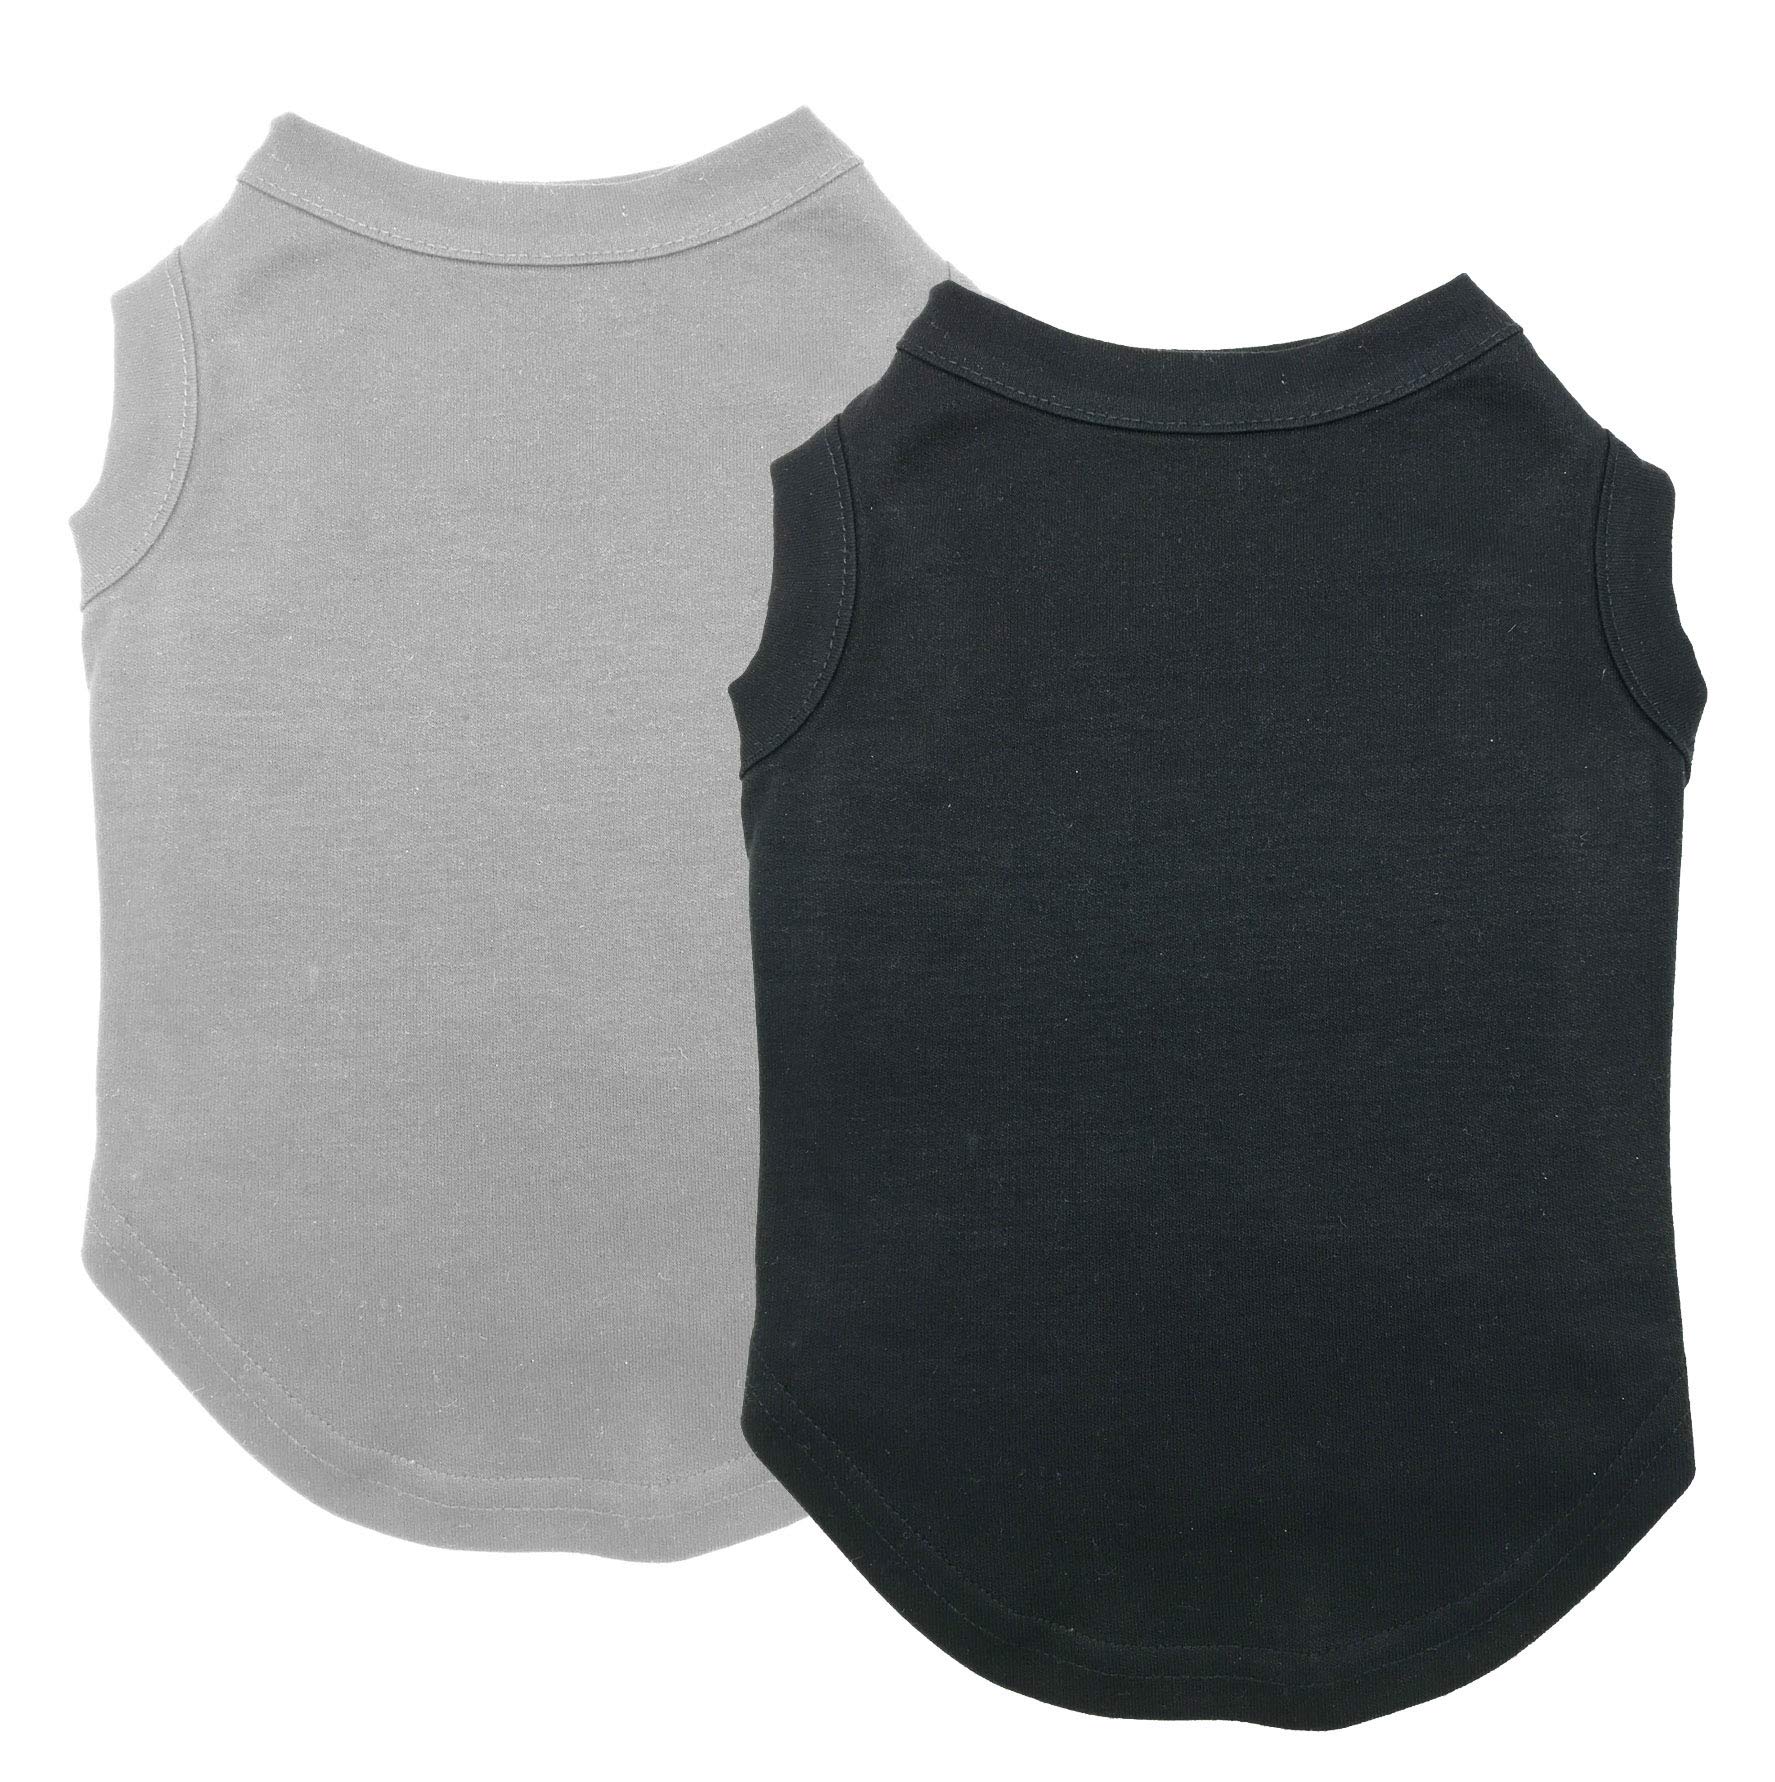 Chol&Vivi Dog Shirts Clothes, Dog Clothes T Shirt Vest Soft And Thin, 2Pcs Blank Shirts Clothes Fit For Extra Small Medium Large